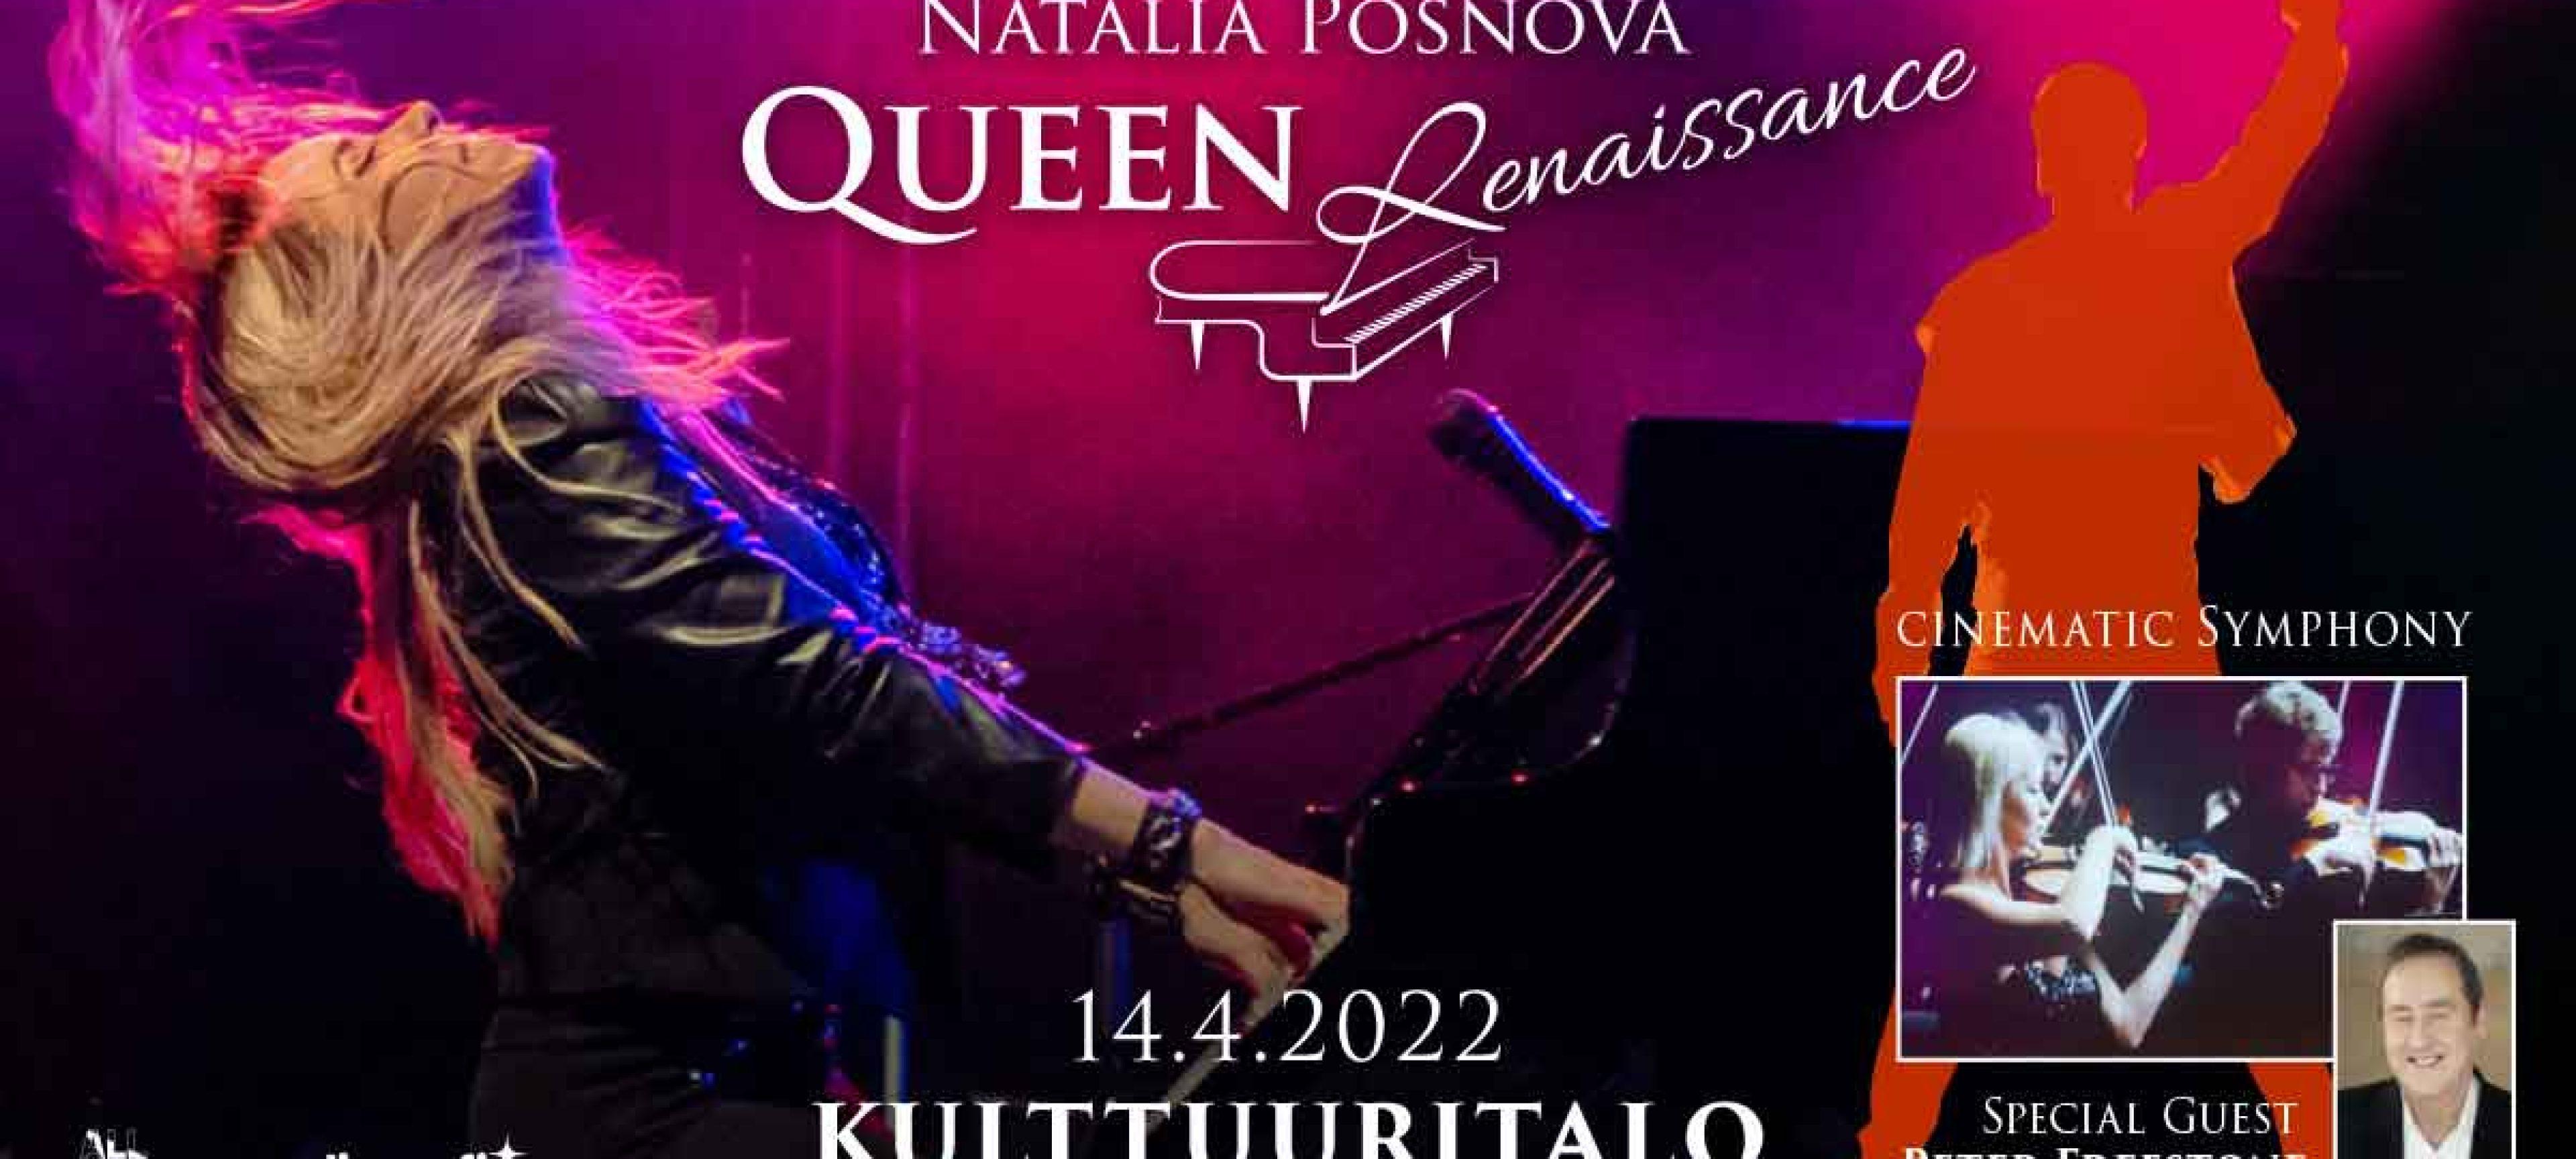 Natalia Posnova playing piano